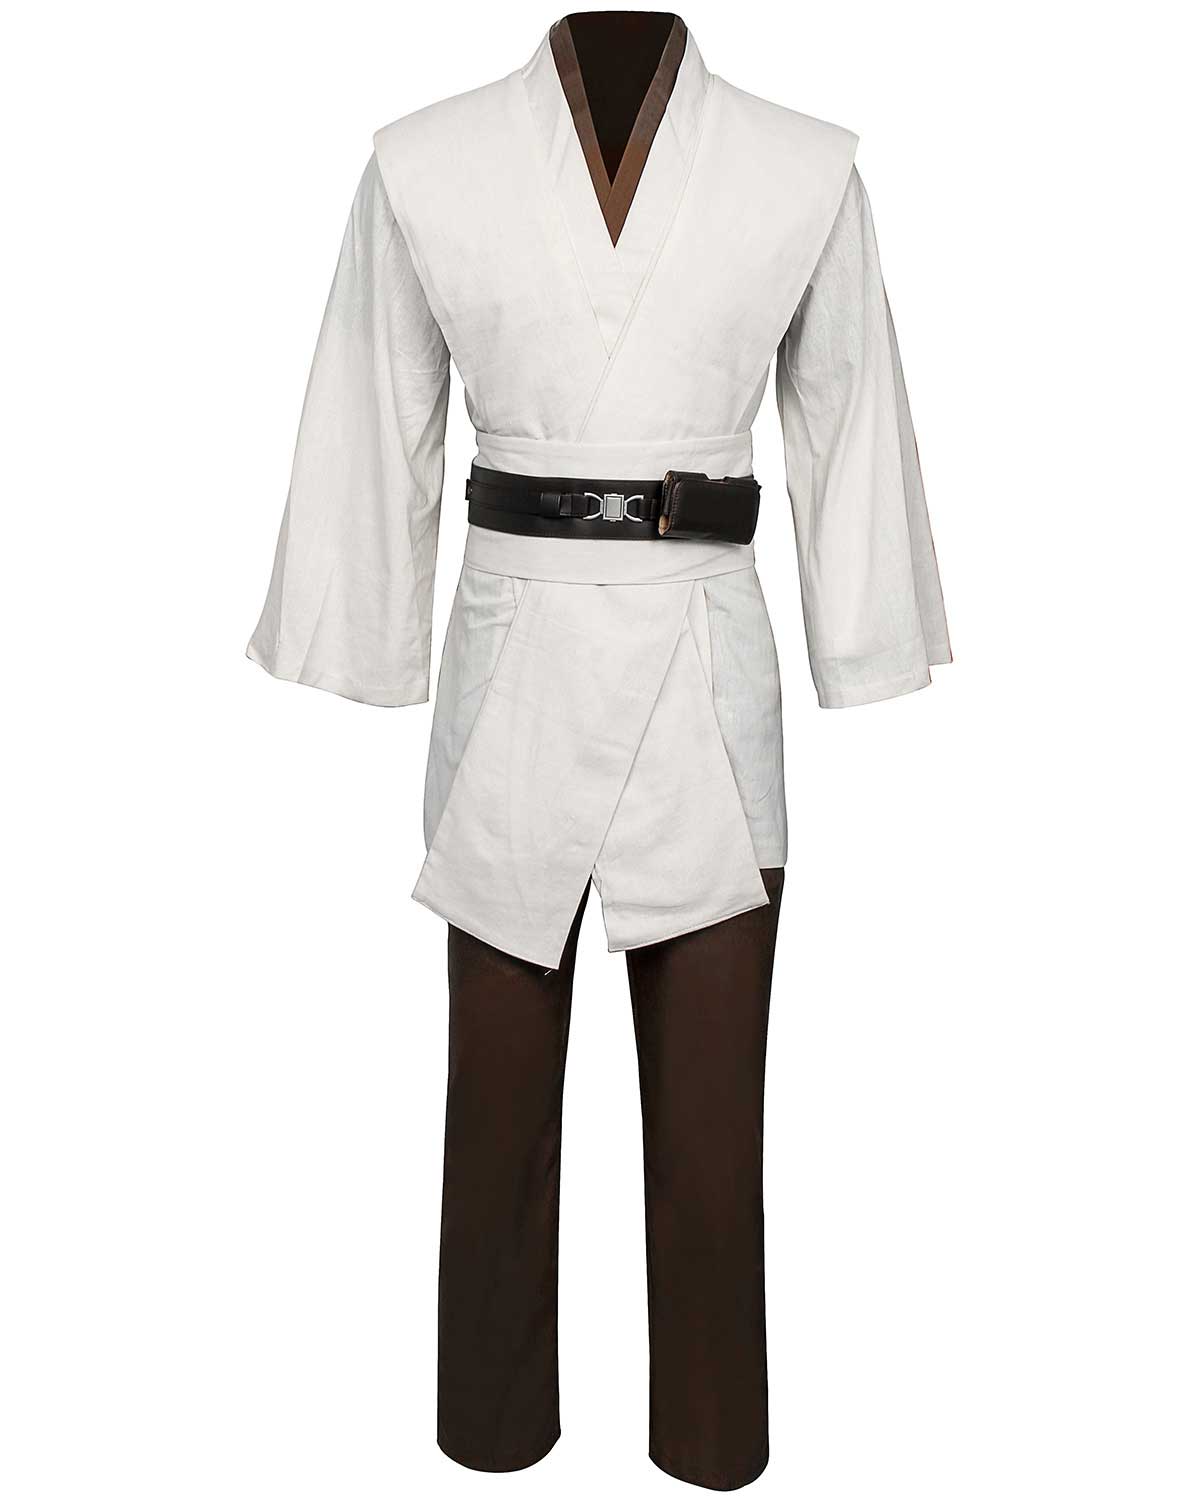 Star Wars Robe Obi Wan Kenobi Jedi Cosplay Costume Original Robes Tunic Halloween Hooded Cloak Robe Uniform Full Set